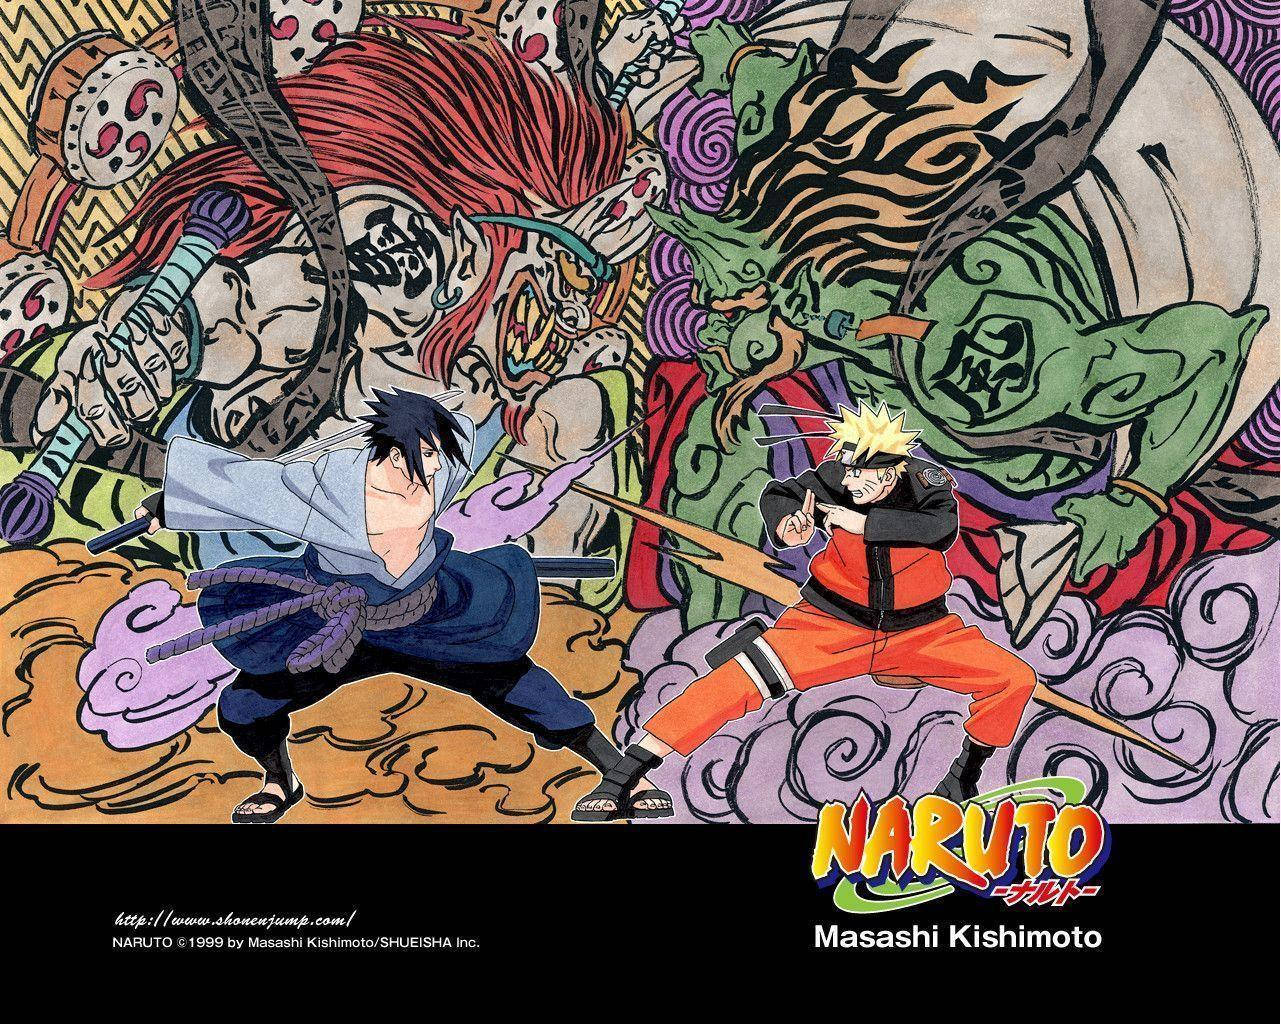 Manga Art Of Naruto Vs Sasuke Wallpaper